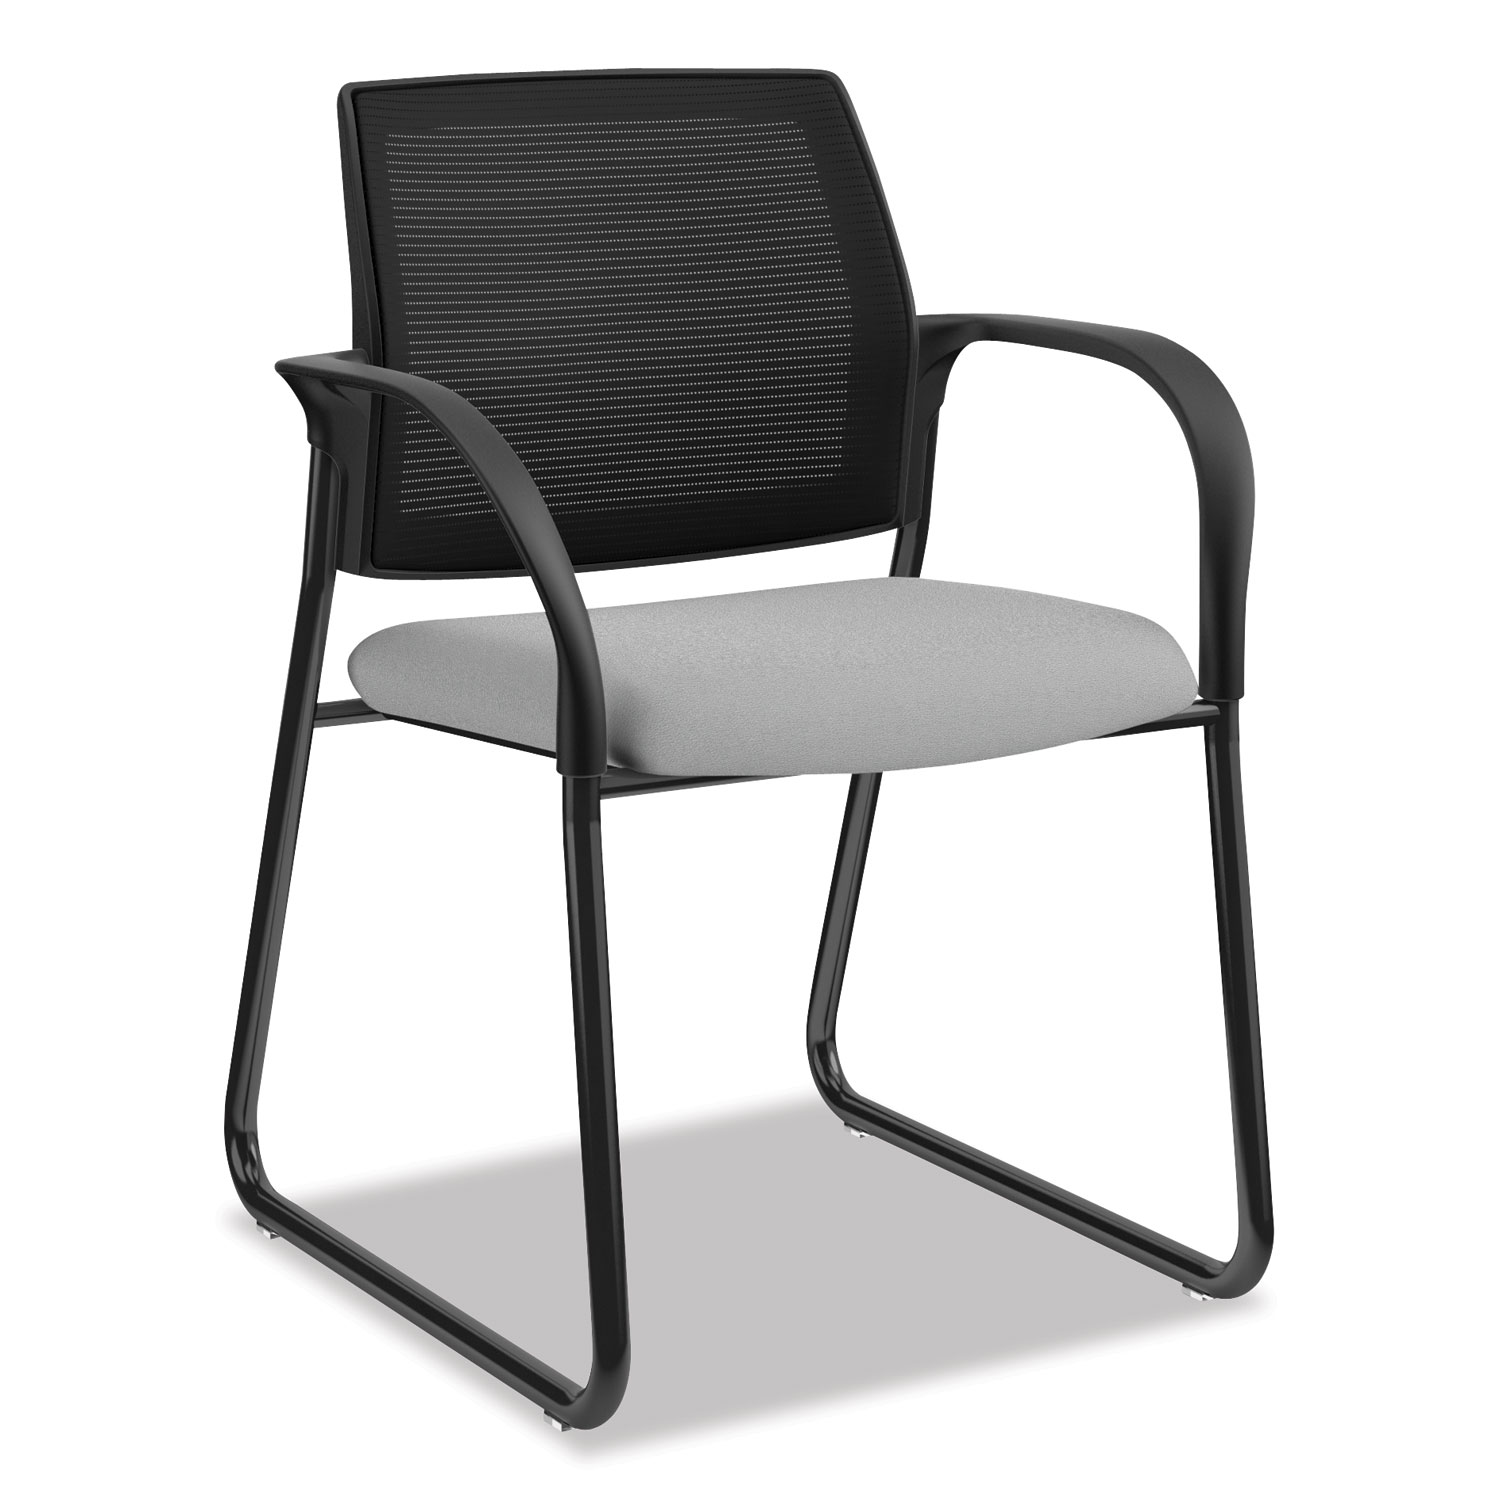  HON HONIB108IMCU22 Ignition Series Mesh Back Guest Chair with Sled Base, 25 x 22 x 34, Black Seat, Black Back, Black Base (HONIB108IMCU22) 